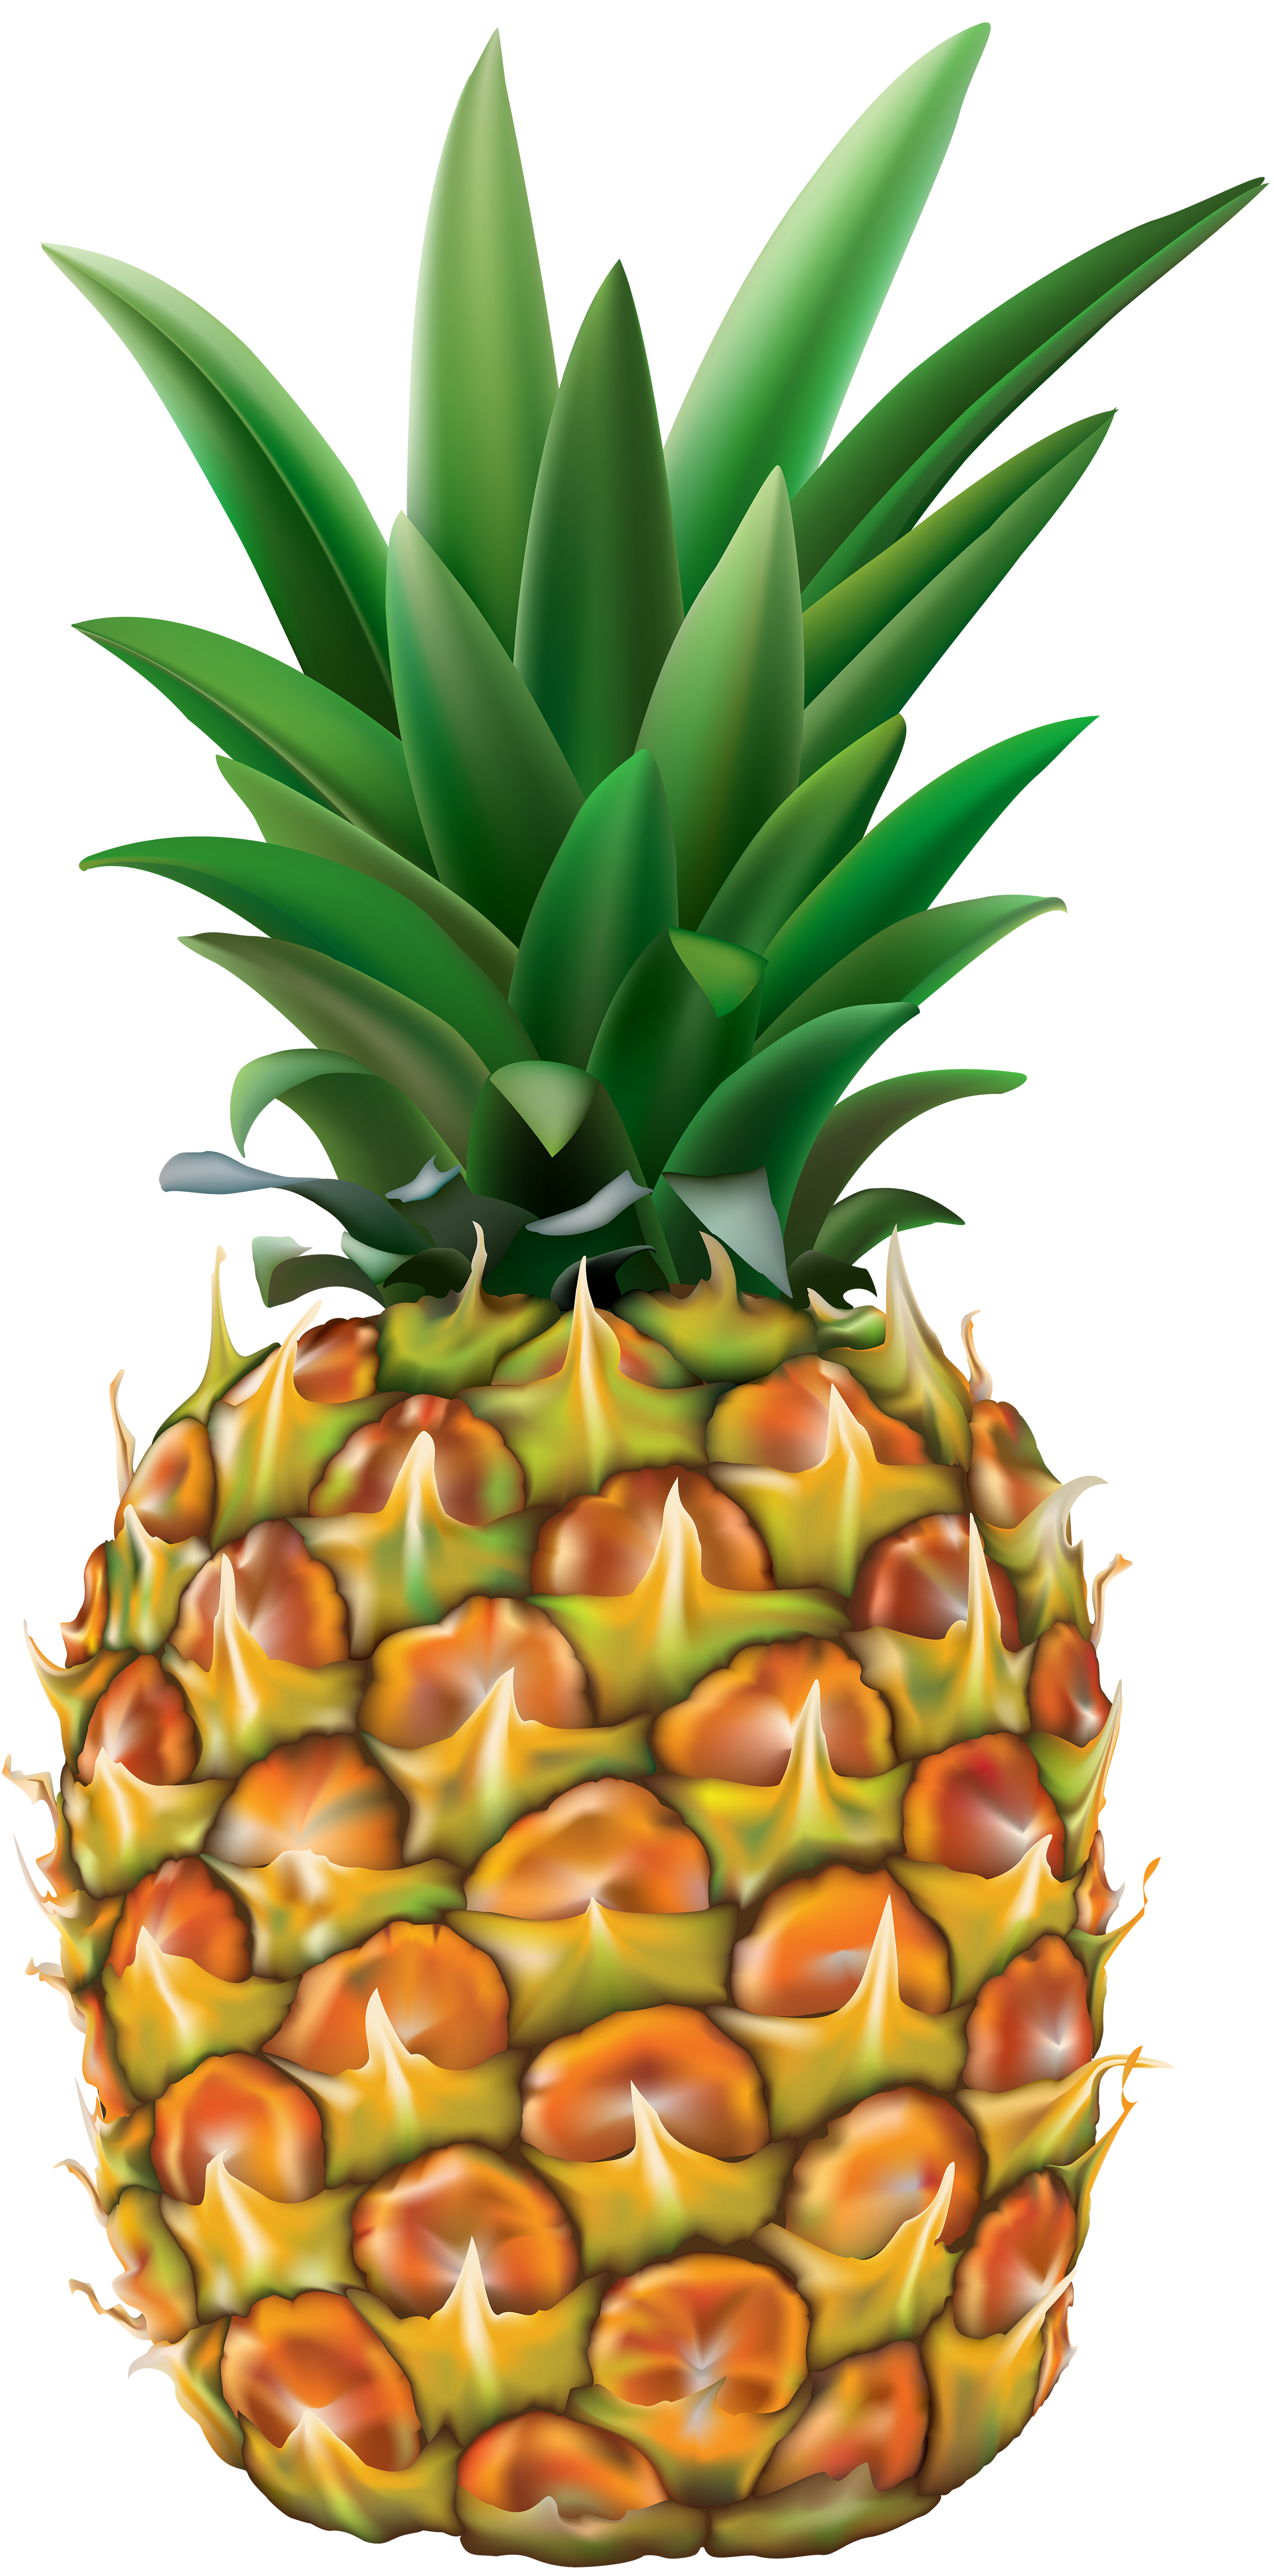 Pineapple Png Clip Art / Shopkins pineapple fruit coloring book